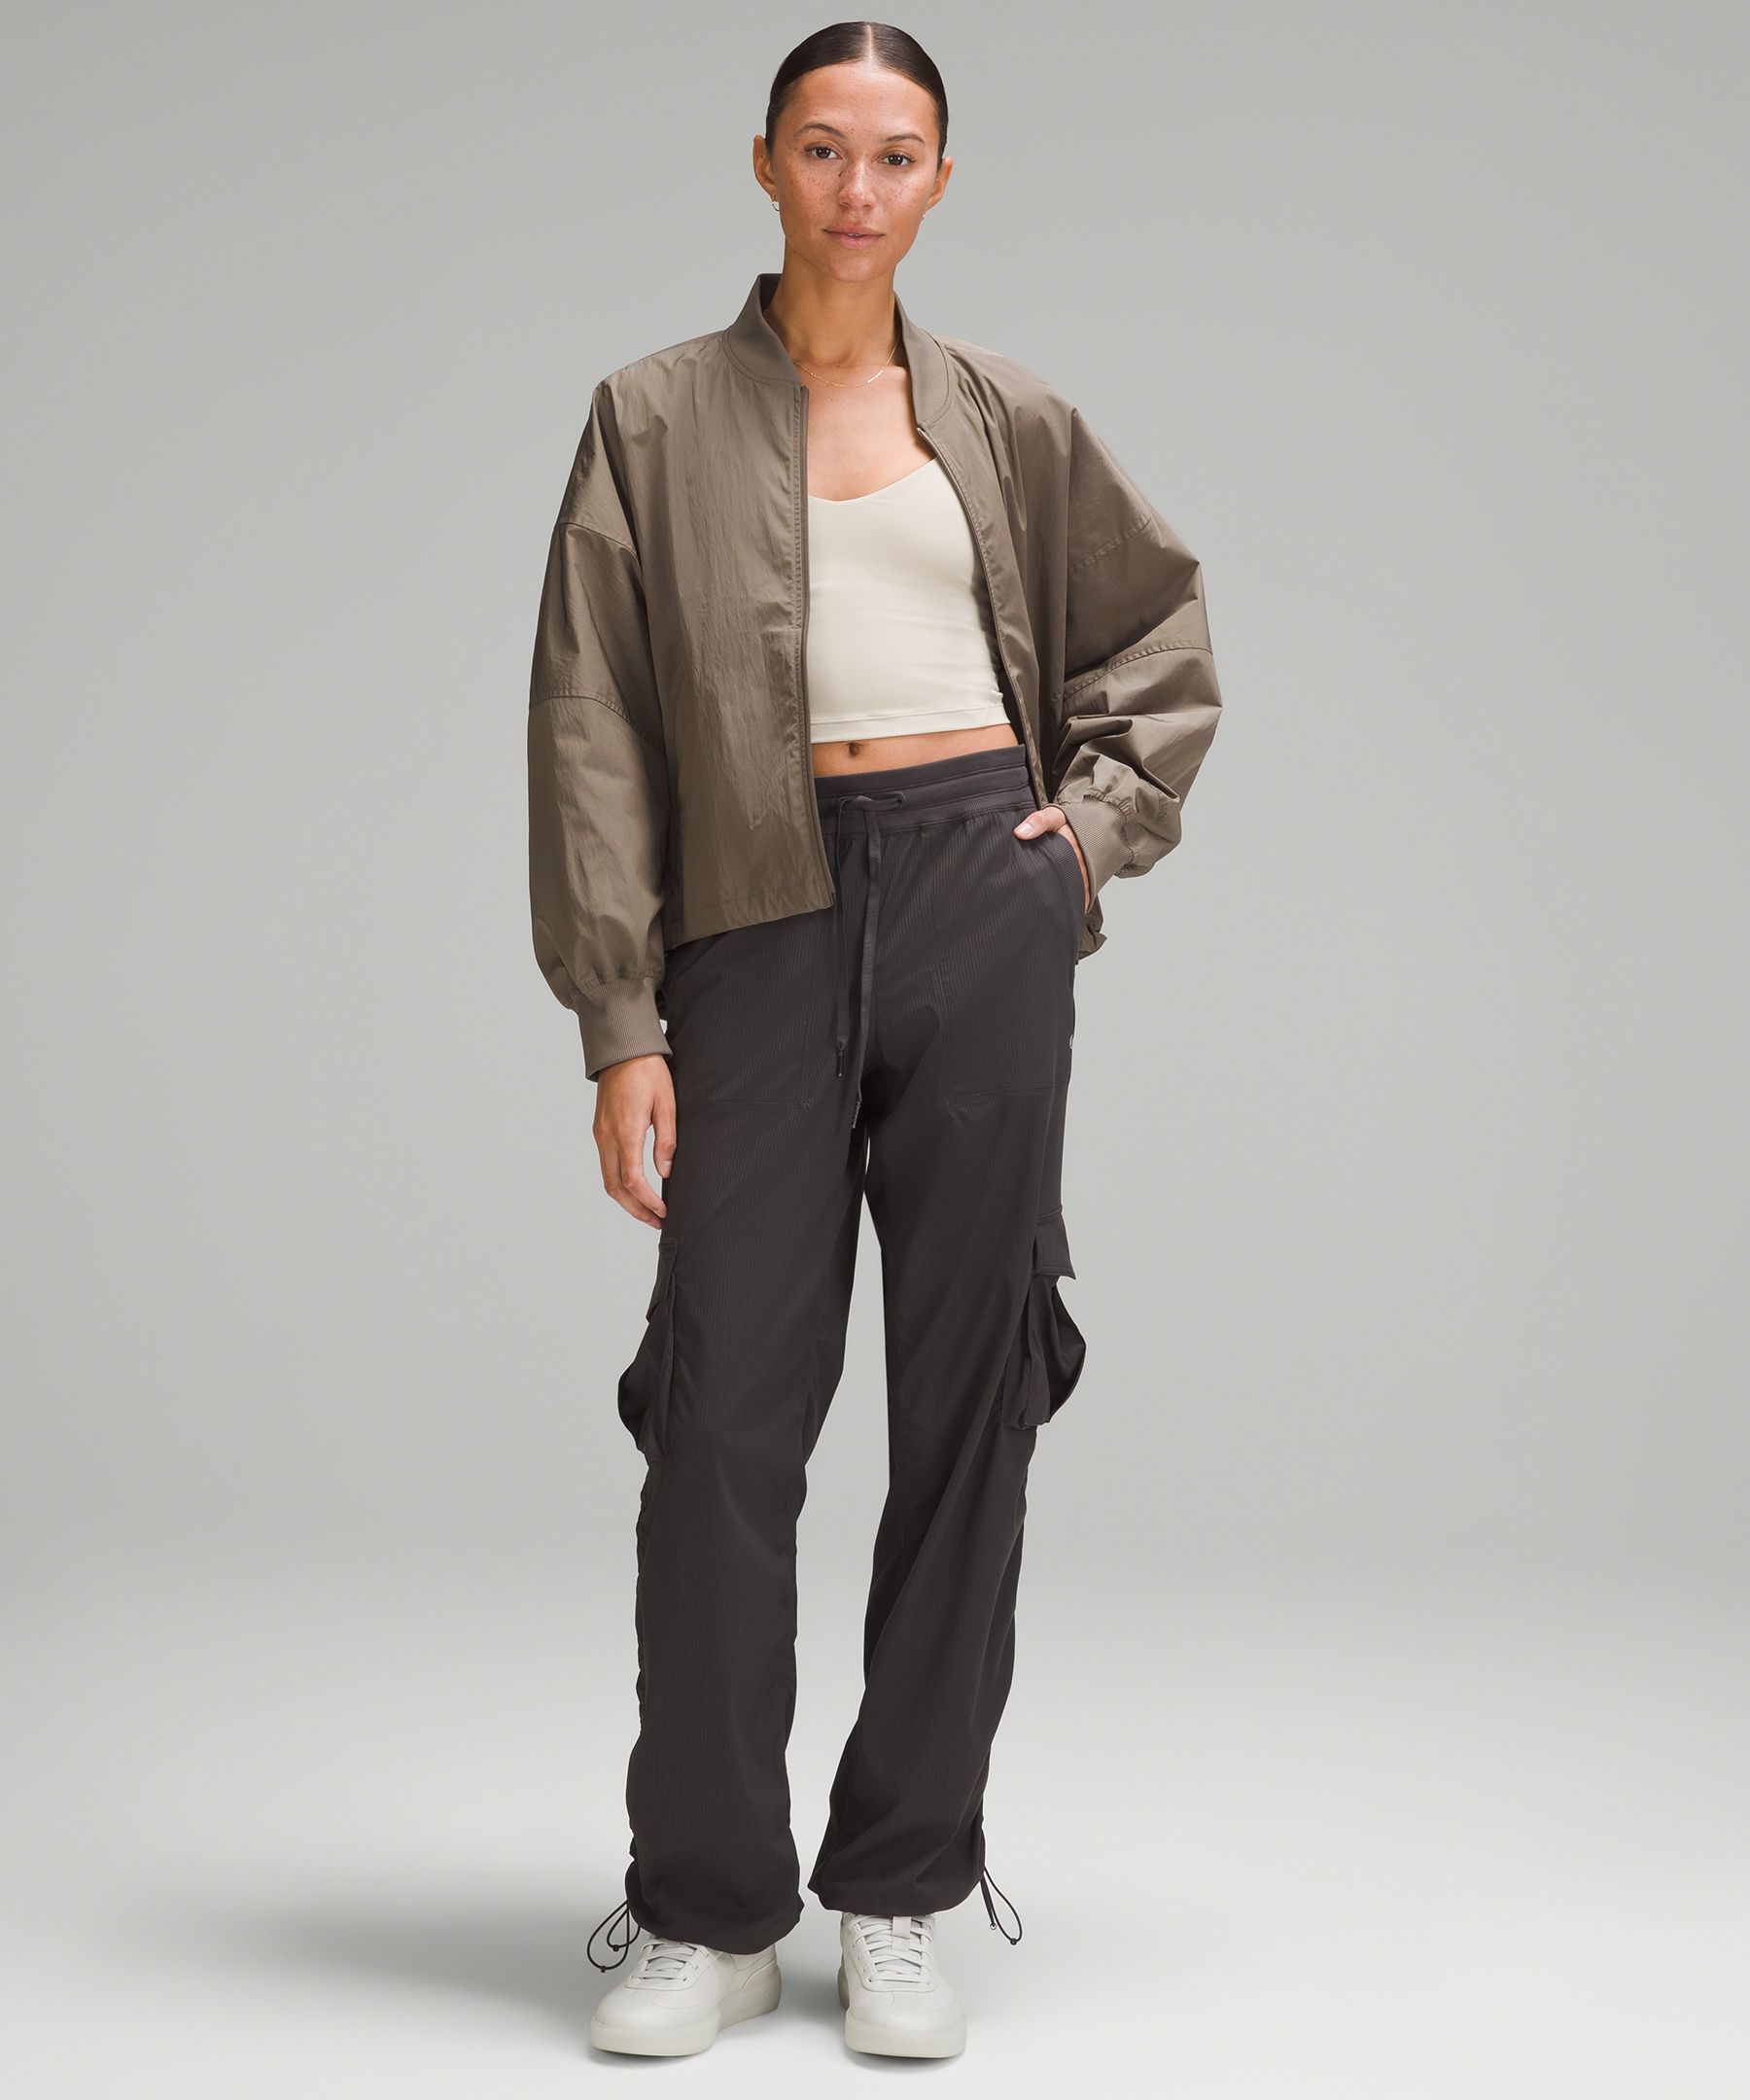 Womens lululemon jacket size 6, Women's - Tops & Outerwear, Ottawa